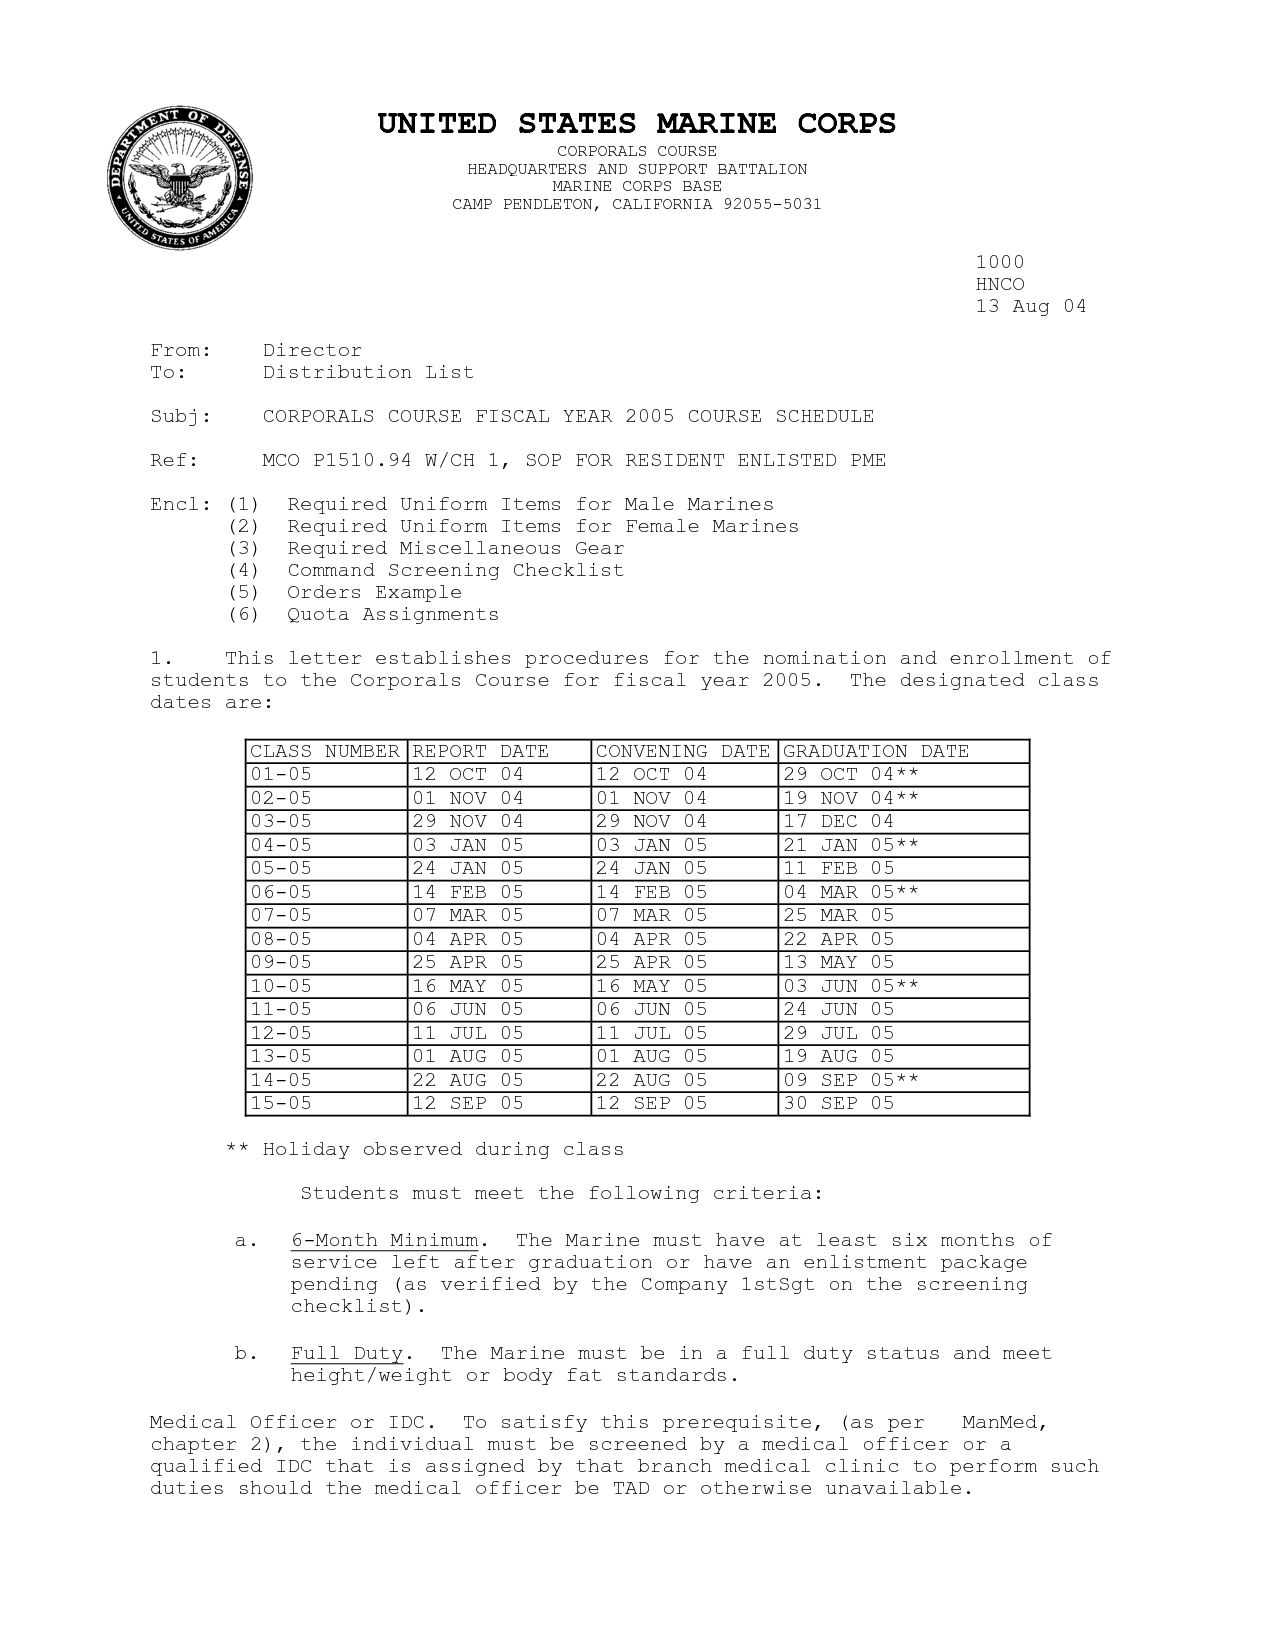 Naval Letter format Usmc Template - â Naval Letter format Usmc Template Best Of Marine Corps Naval